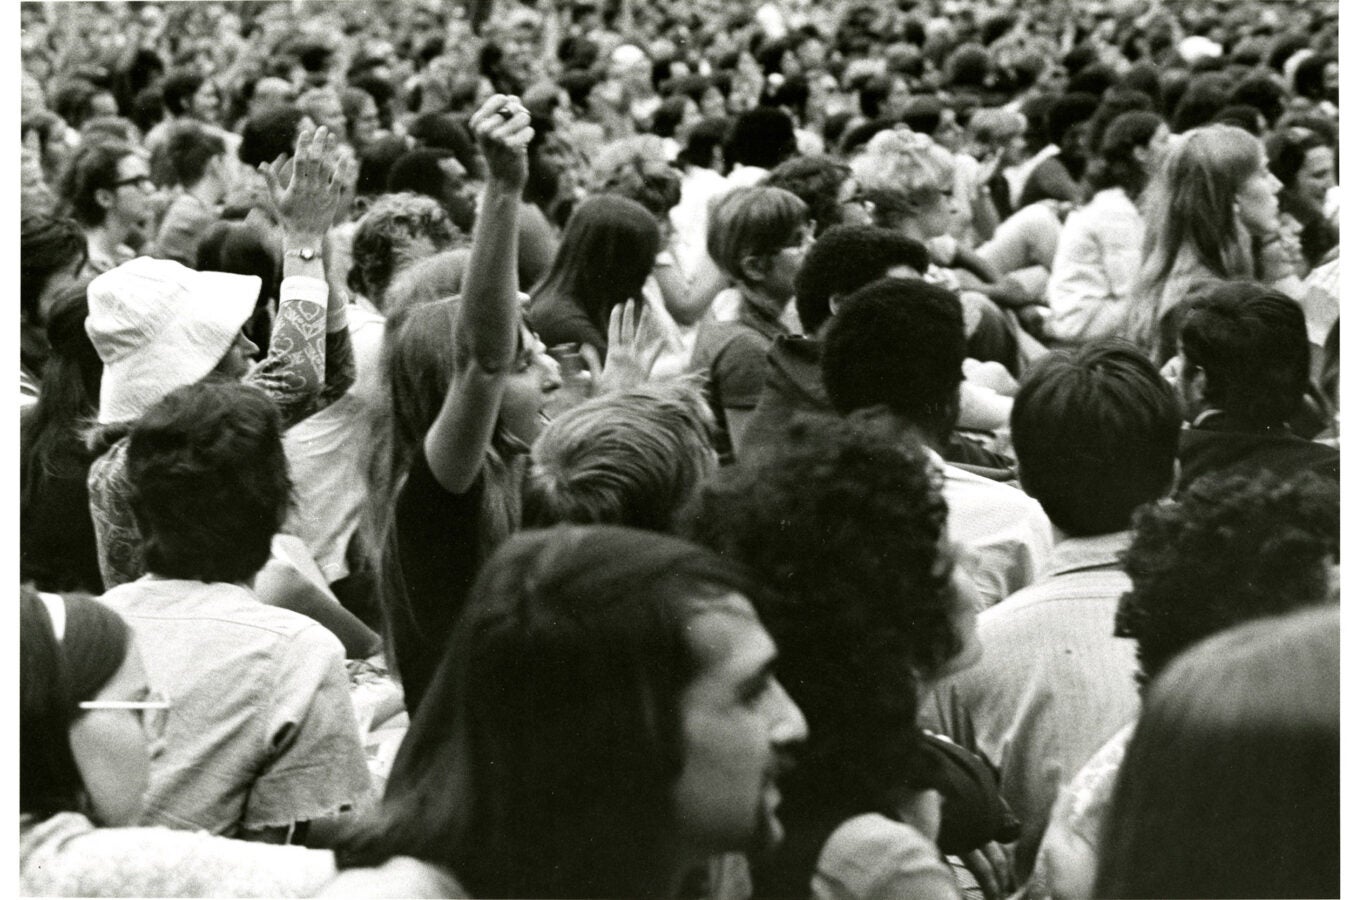 Women's rights demonstration, 1970.